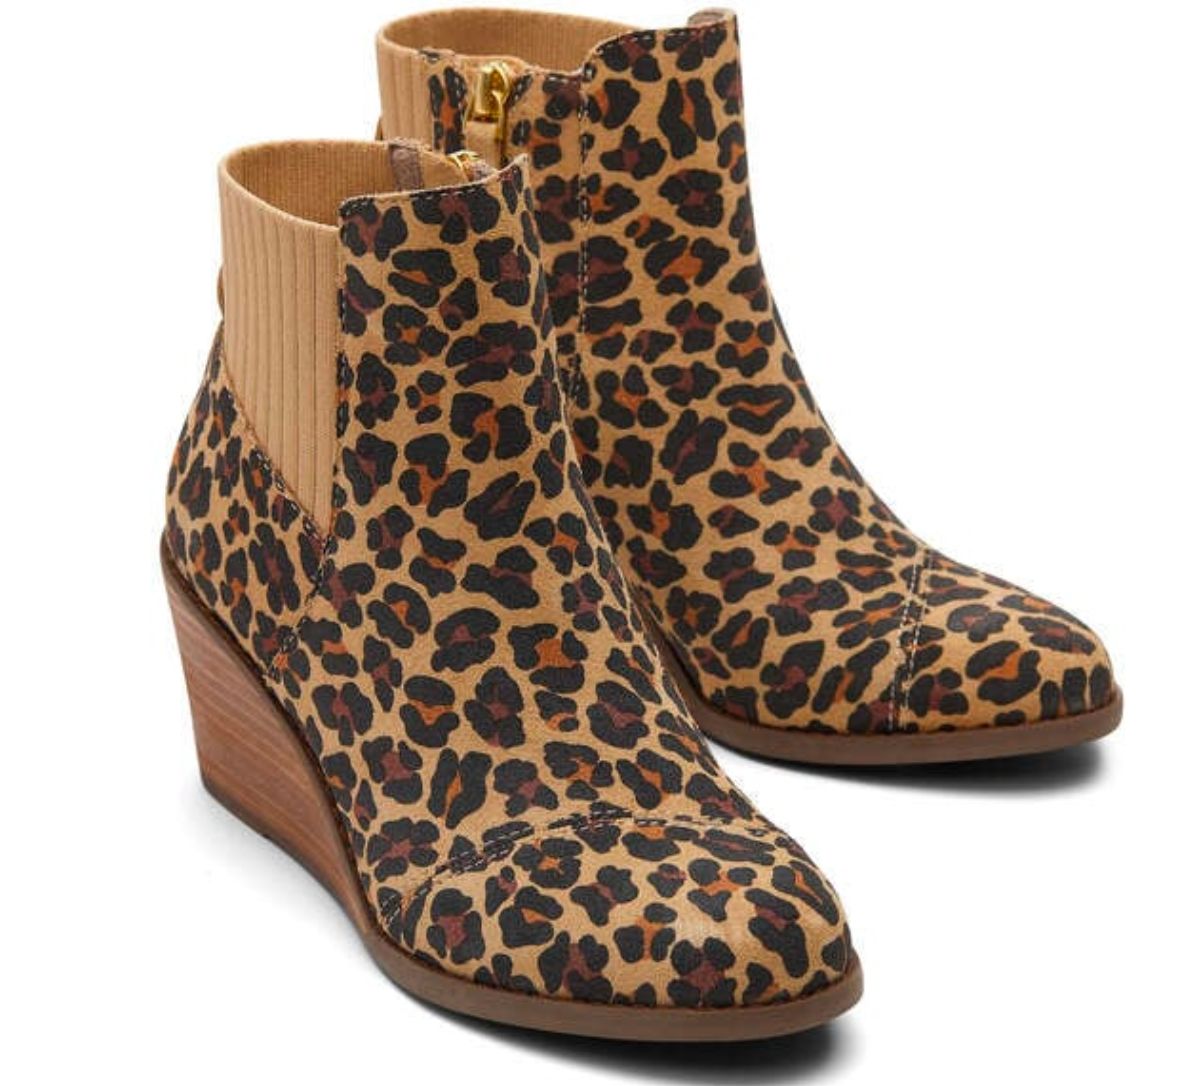 Toms Womens’ Sadie Boot in tan leopard stock image